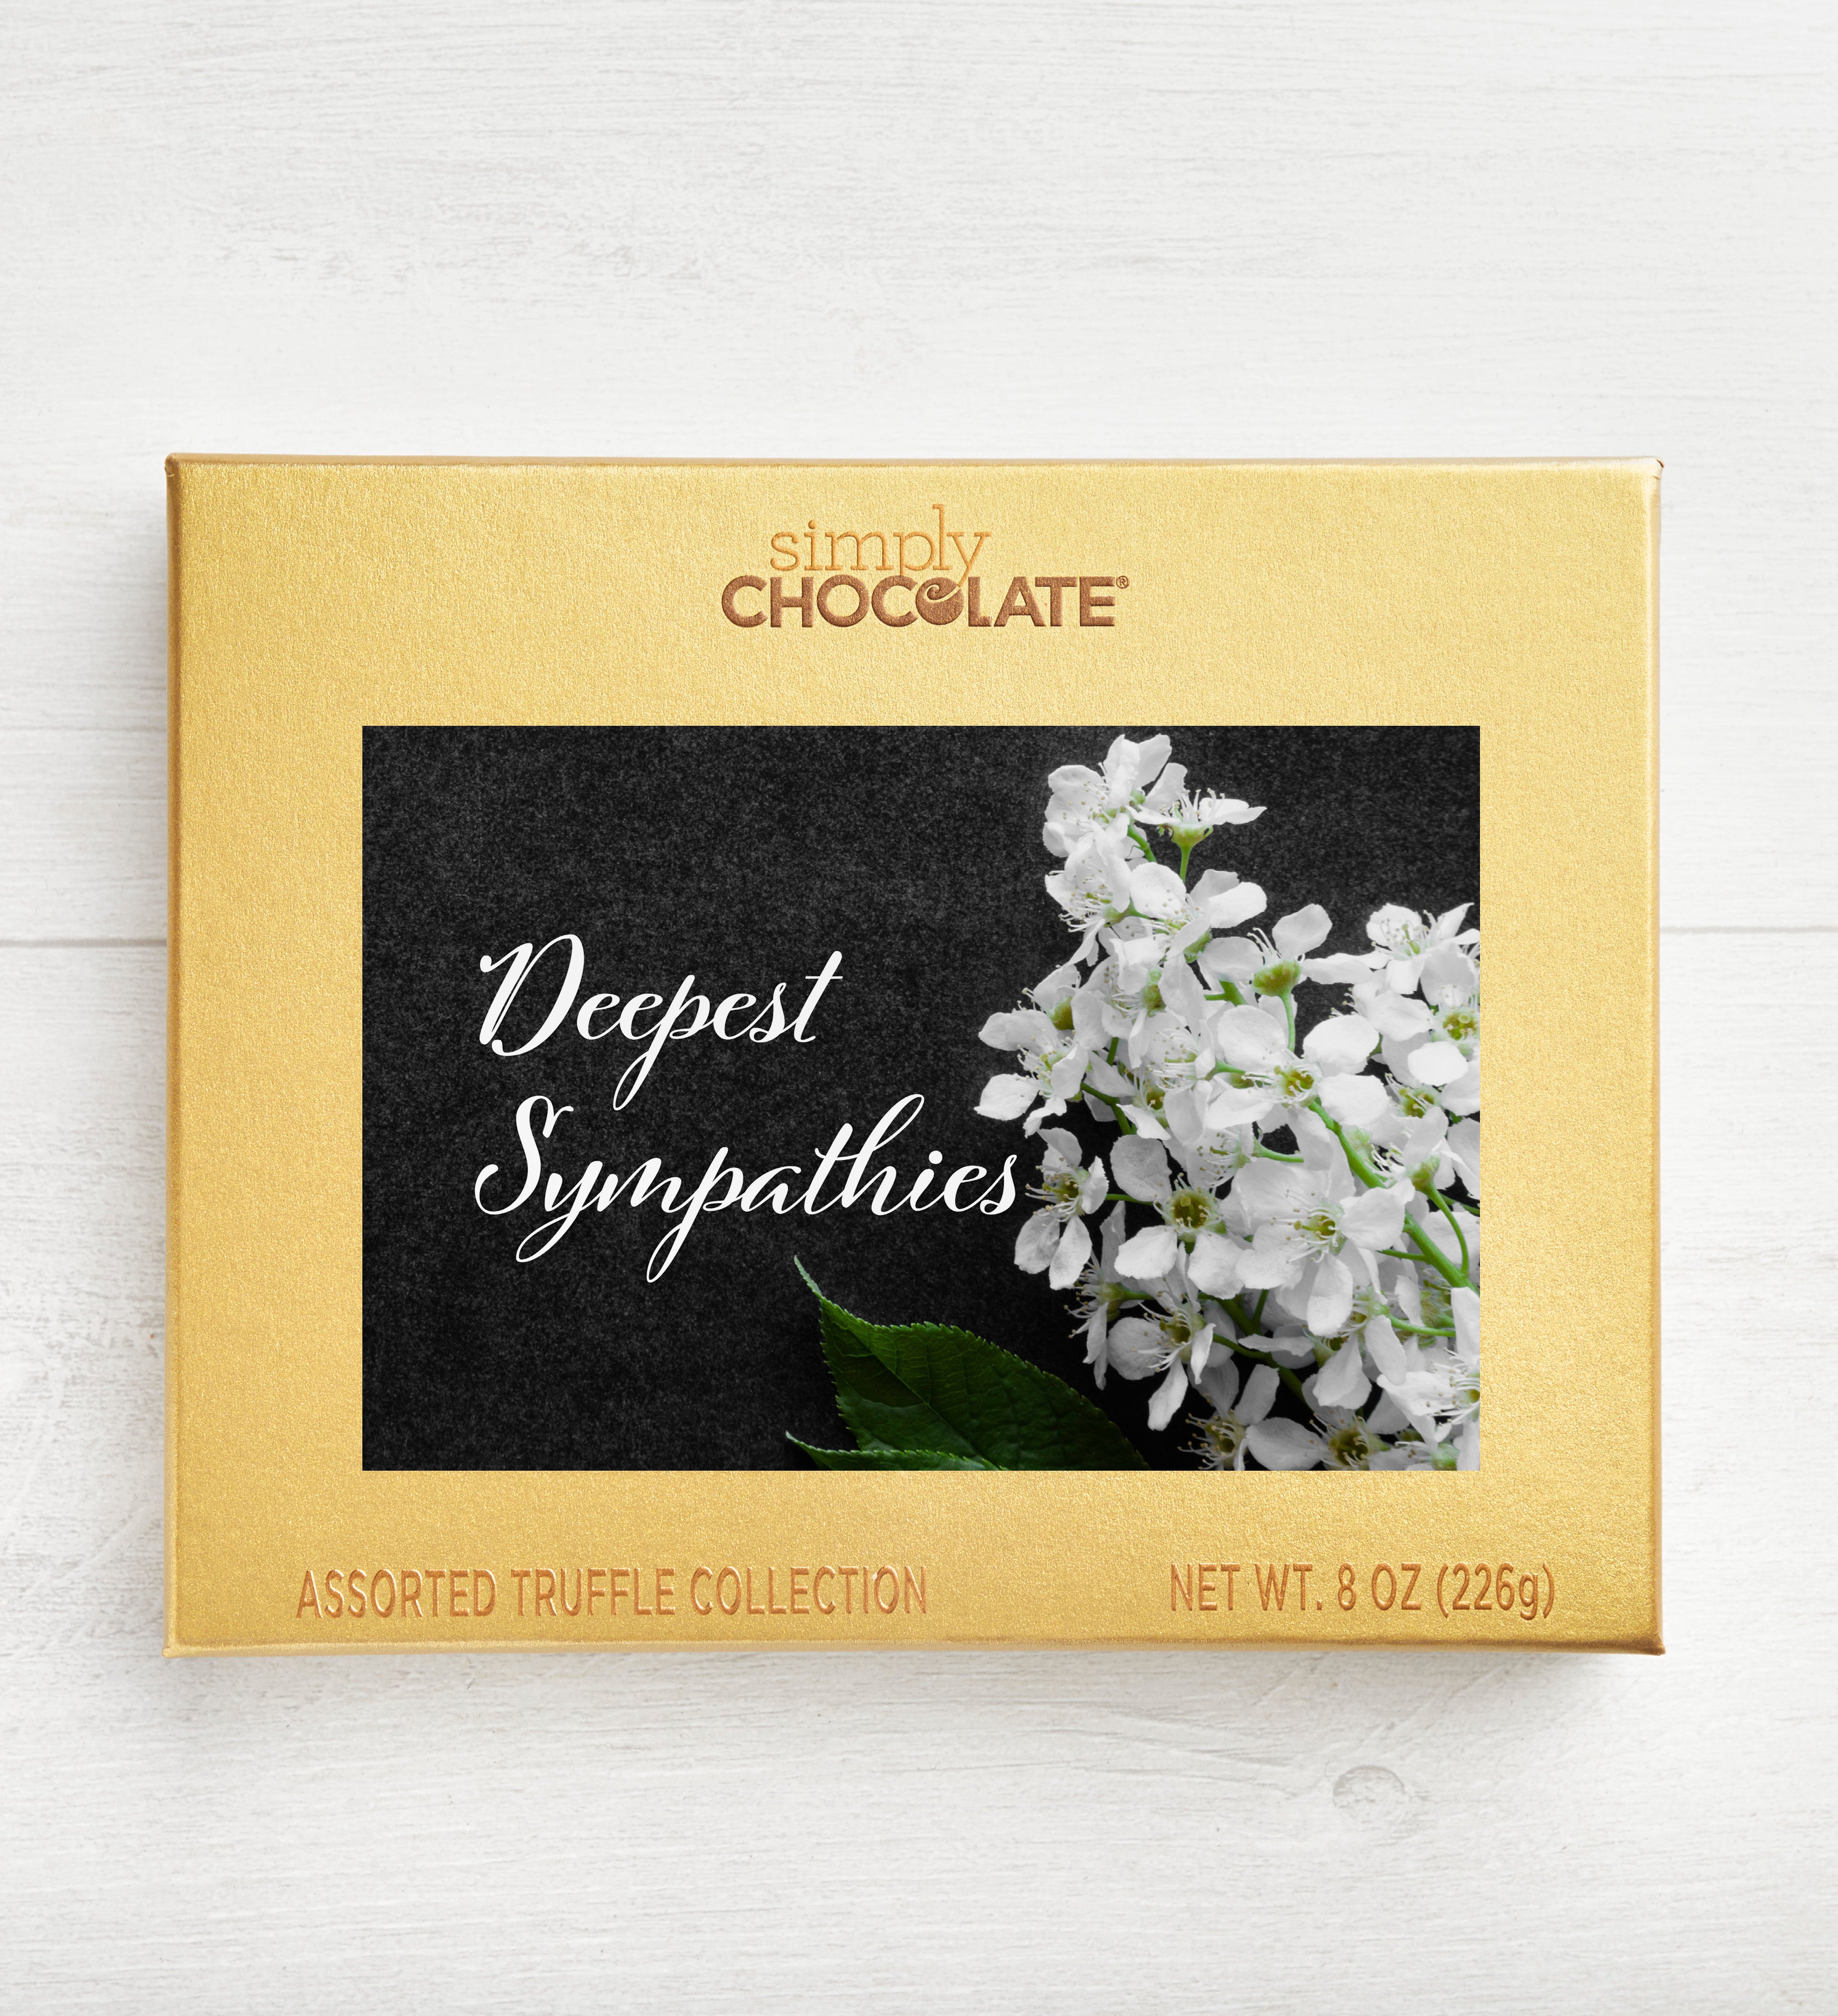 Deepest Sympathies 17pc Chocolate Box